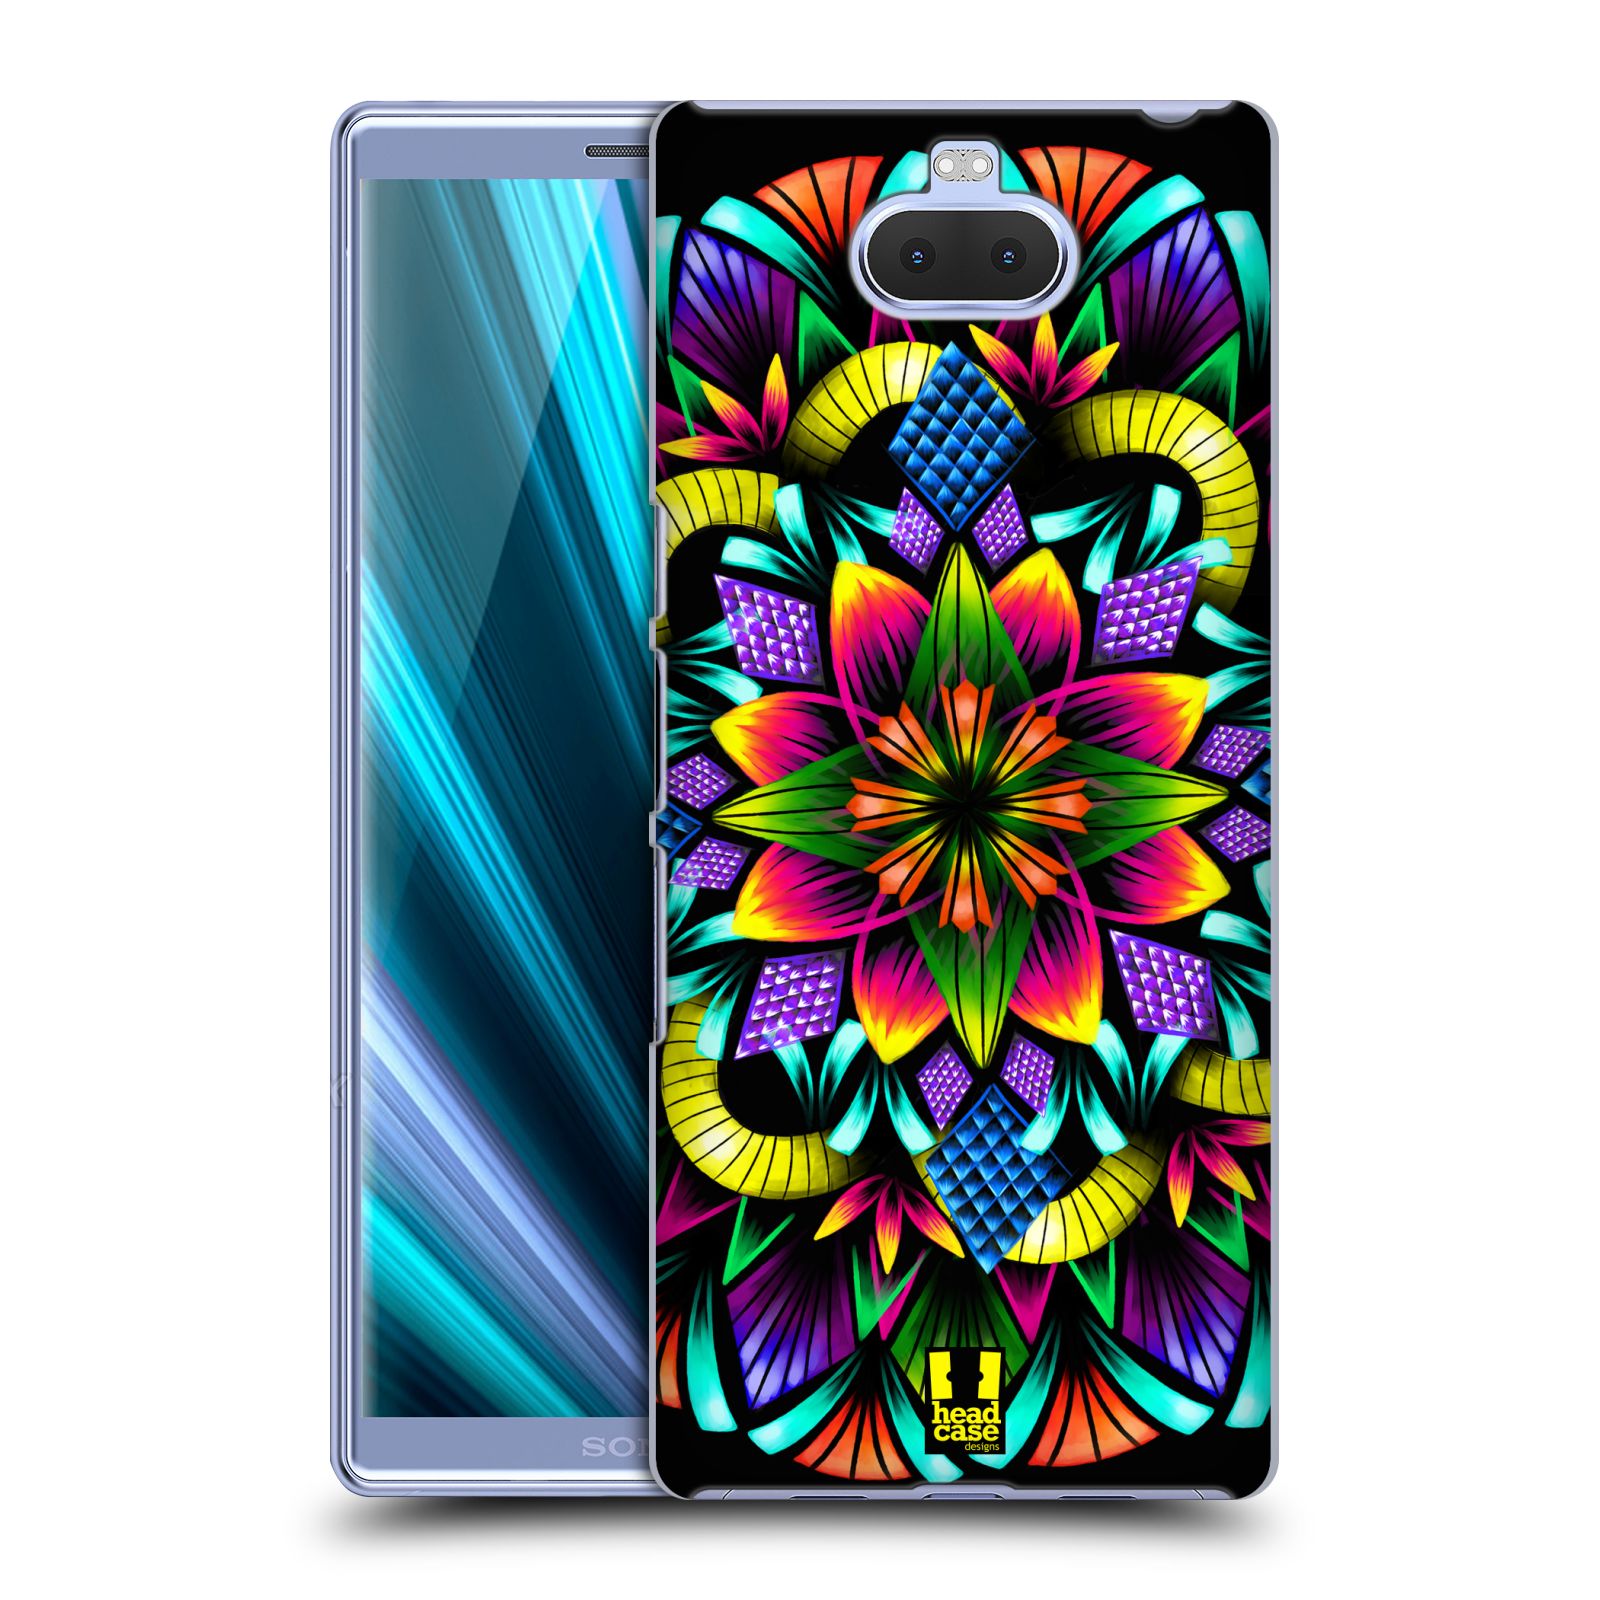 Pouzdro na mobil Sony Xperia 10 - Head Case - vzor Indie Mandala kaleidoskop barevný vzor KVĚTINA